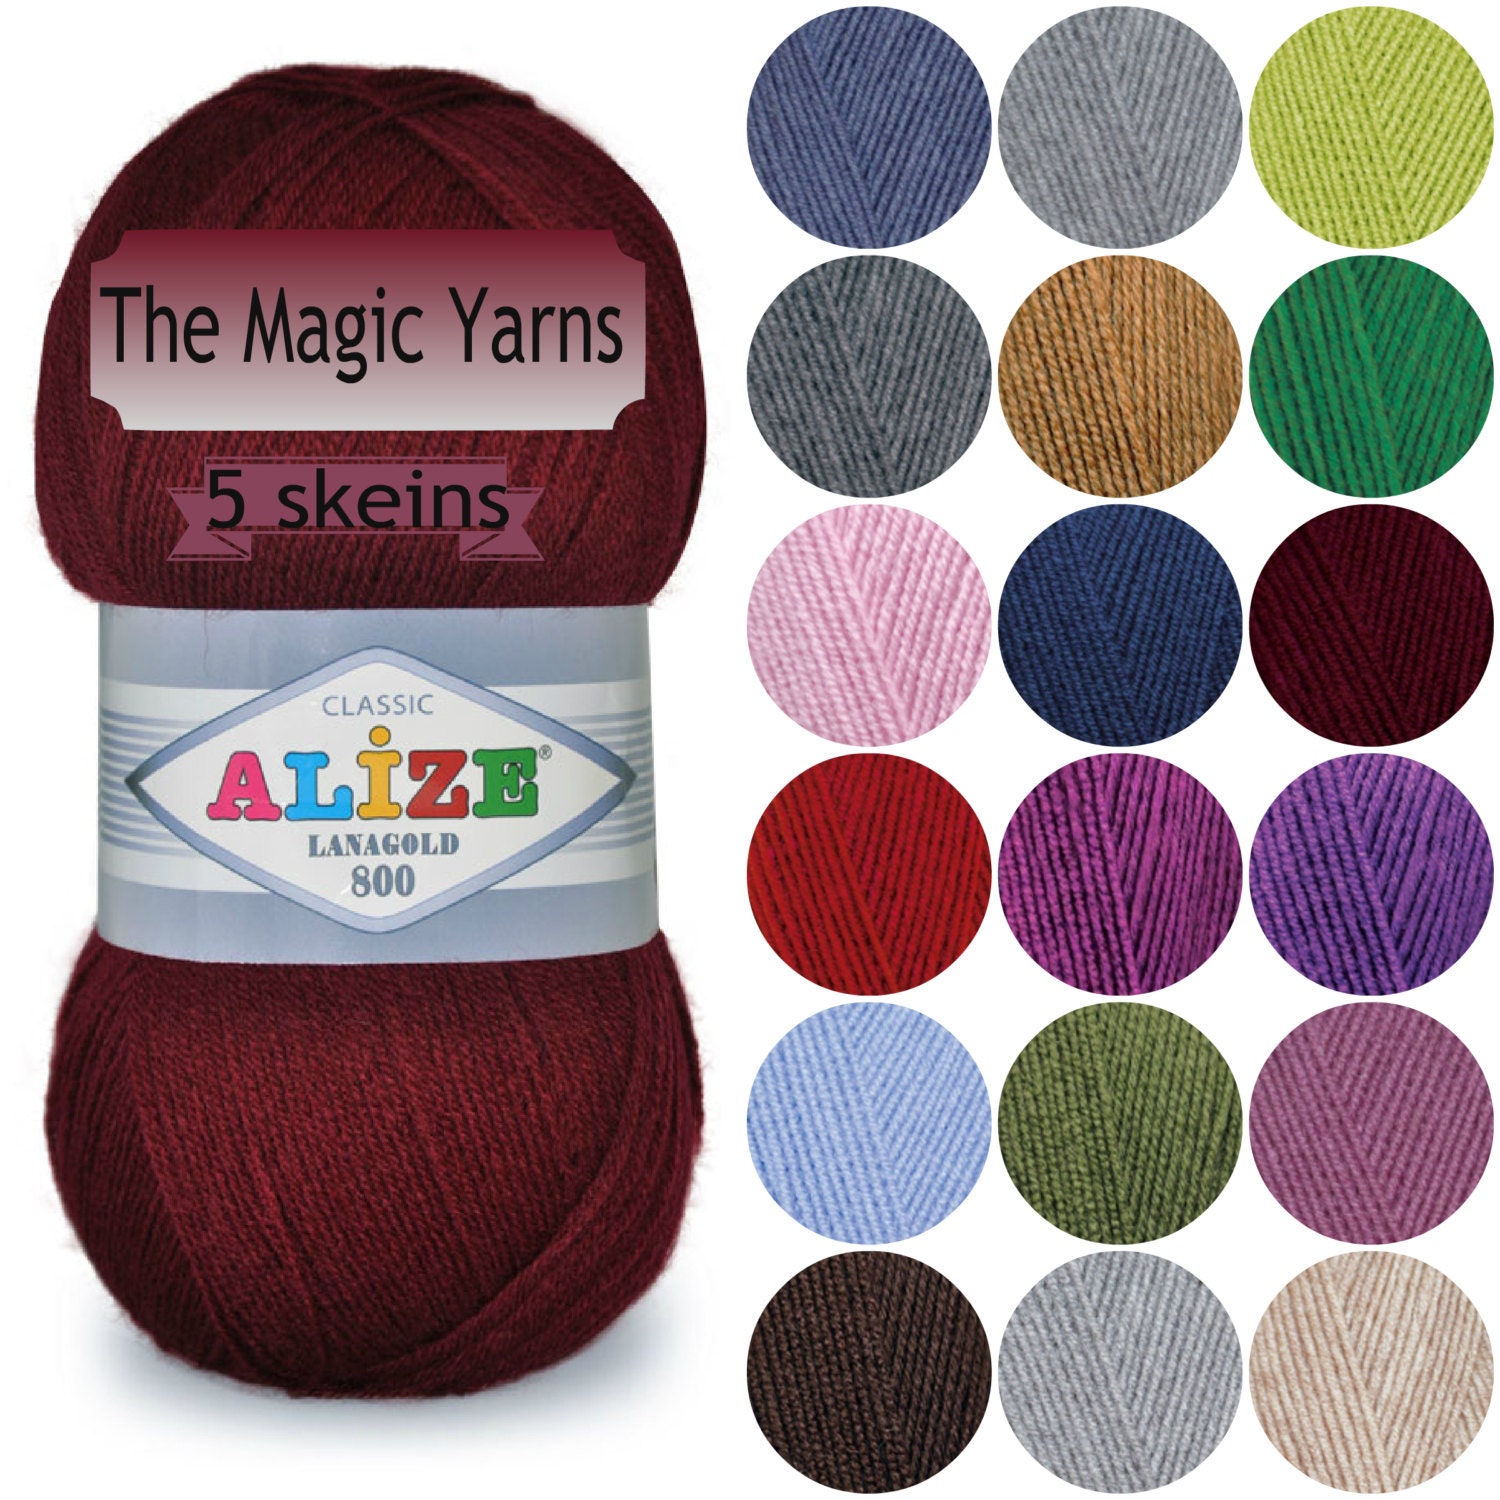 Alize Lanagold 800, Wool Yarn, Wool Blend Yarn, Acrylic Super Fine Weight Knitting Winter Crochet Yarn